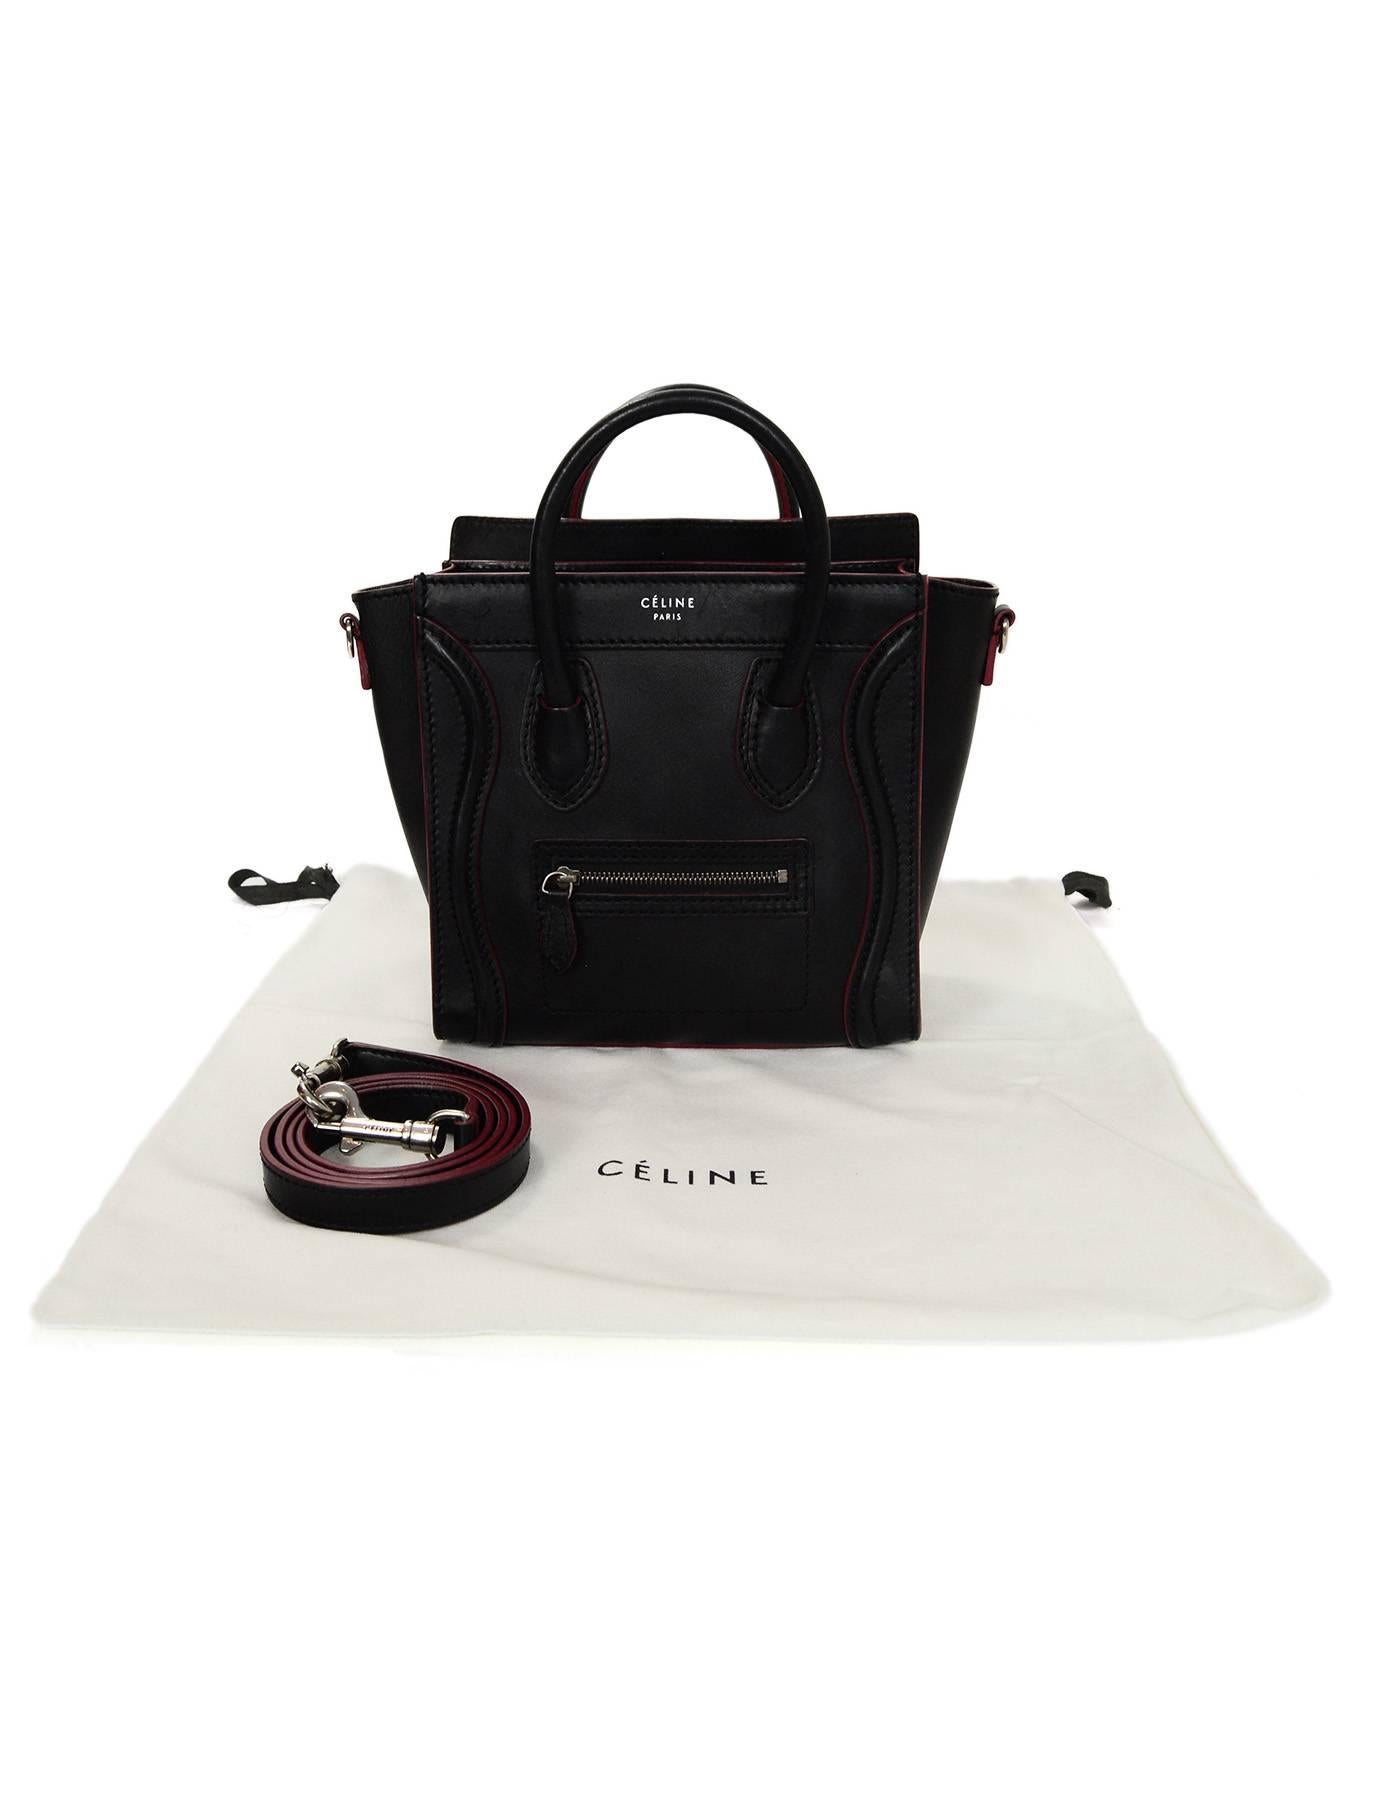 Celine Black Leather Nano Luggage Tote Crossbody Bag w/ Red Trim 2